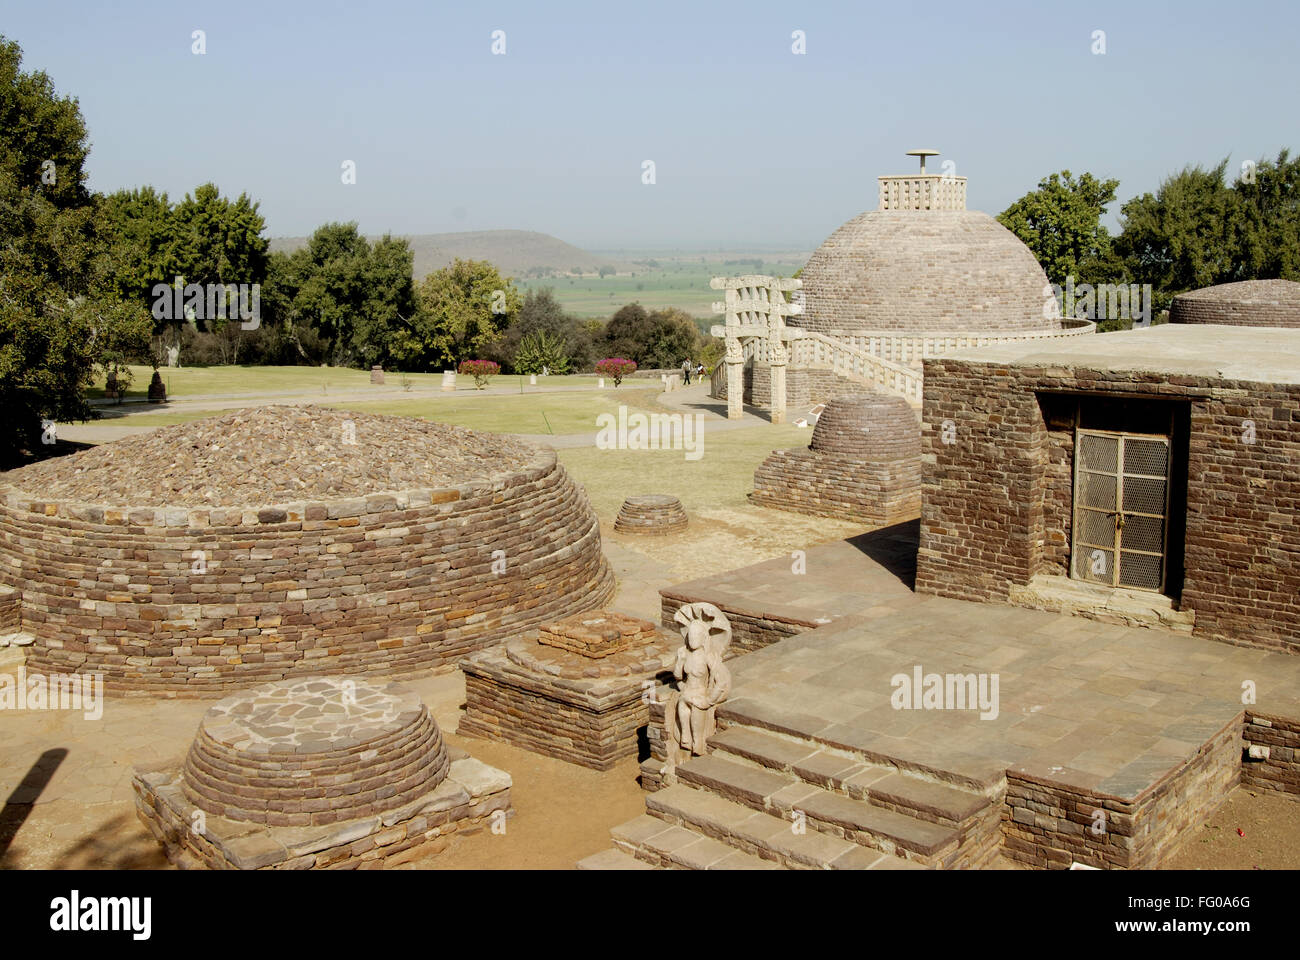 Great maha stupa no 3 specimens of Buddhist architectural forms chaityas monasteries at Sanchi , Bhopal , Madhya Pradesh Stock Photo